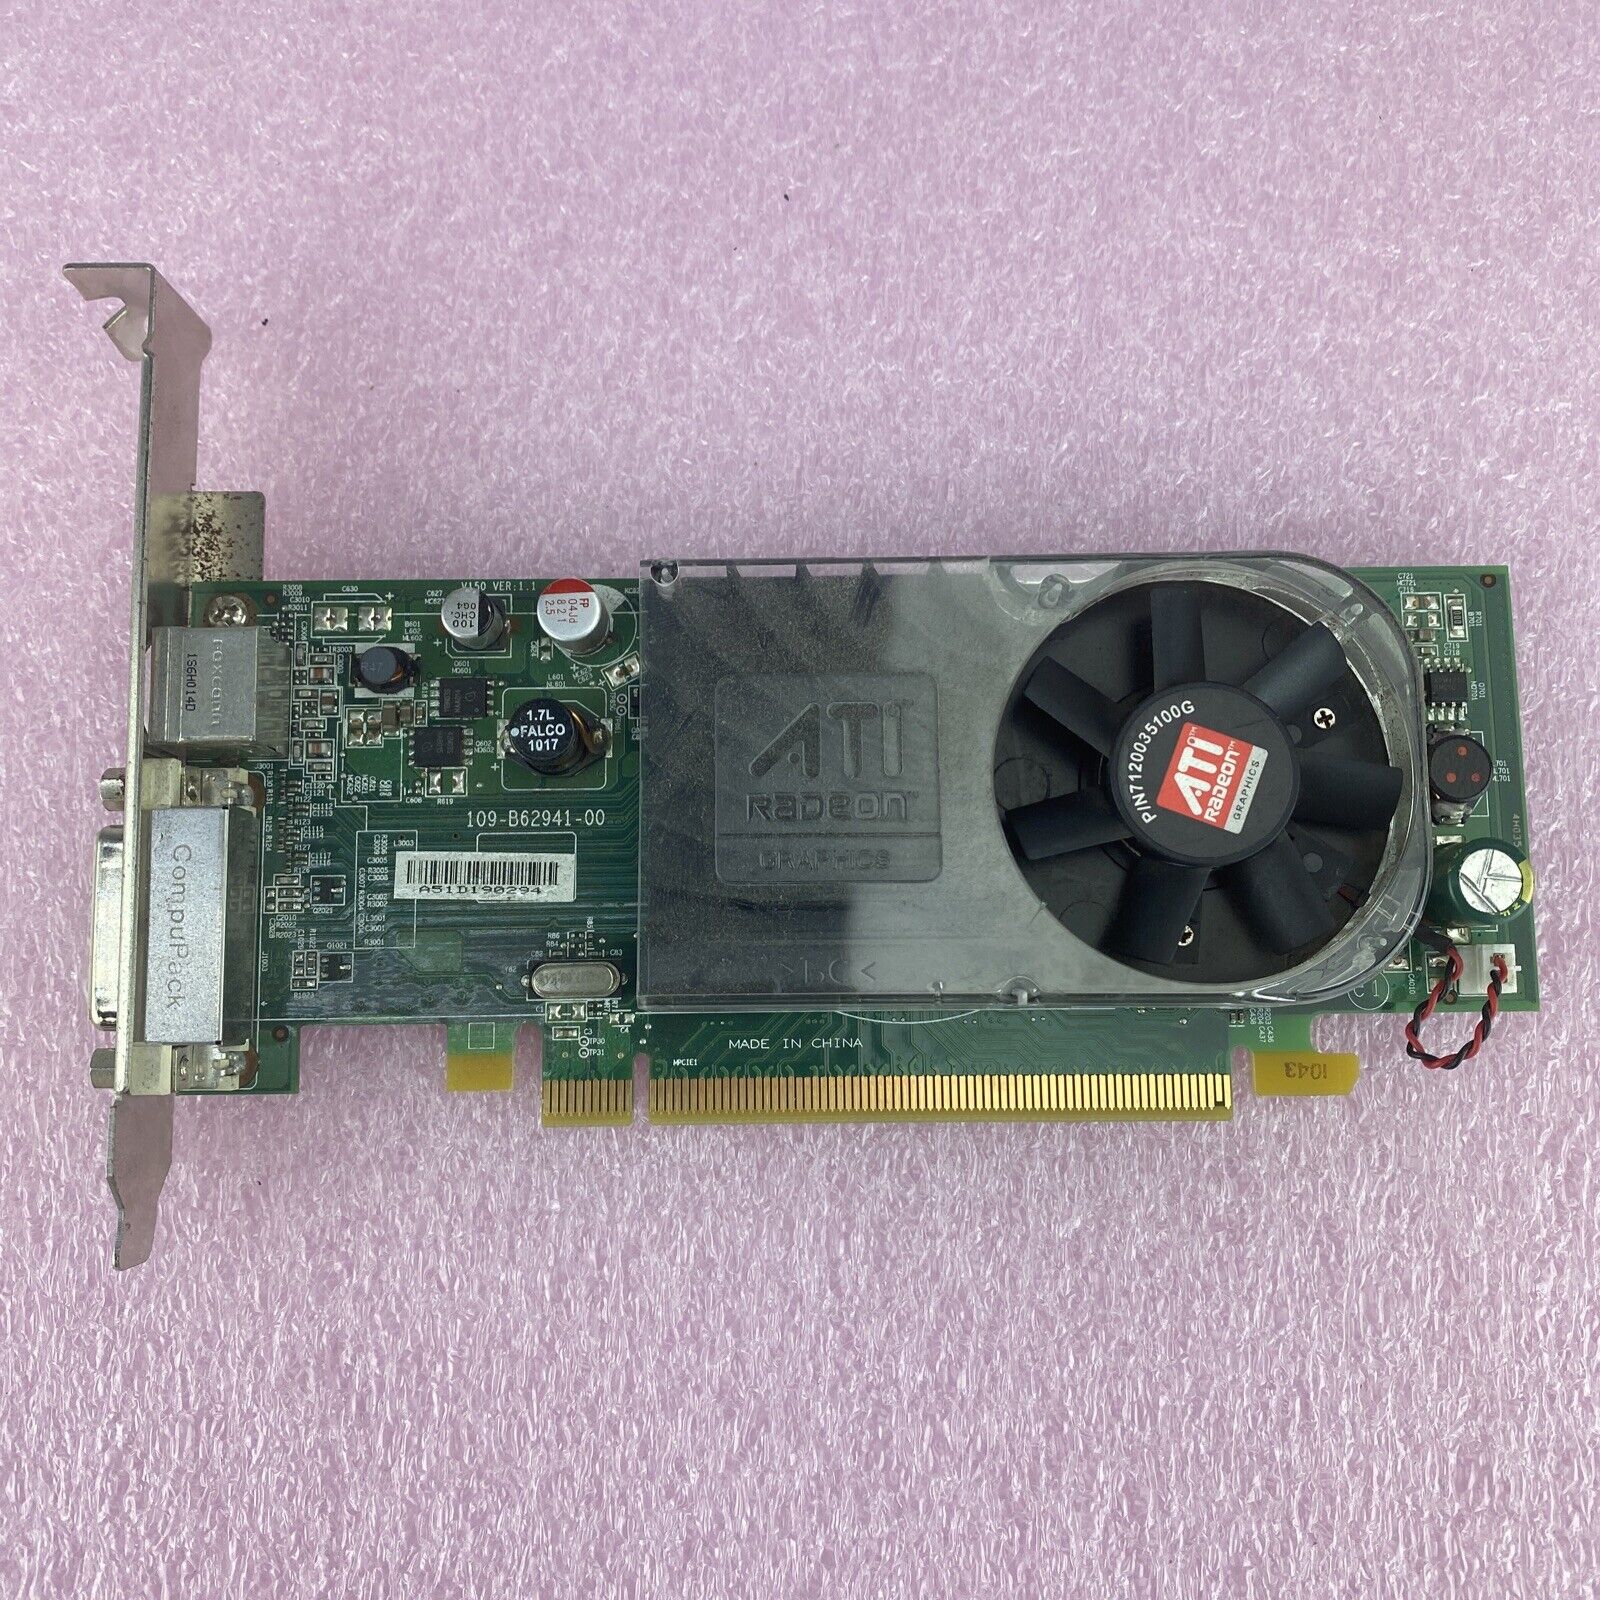 Mix of 4 Untested ATI Radeon 256MB DMS-59 S-Video PCIe16 GPUs